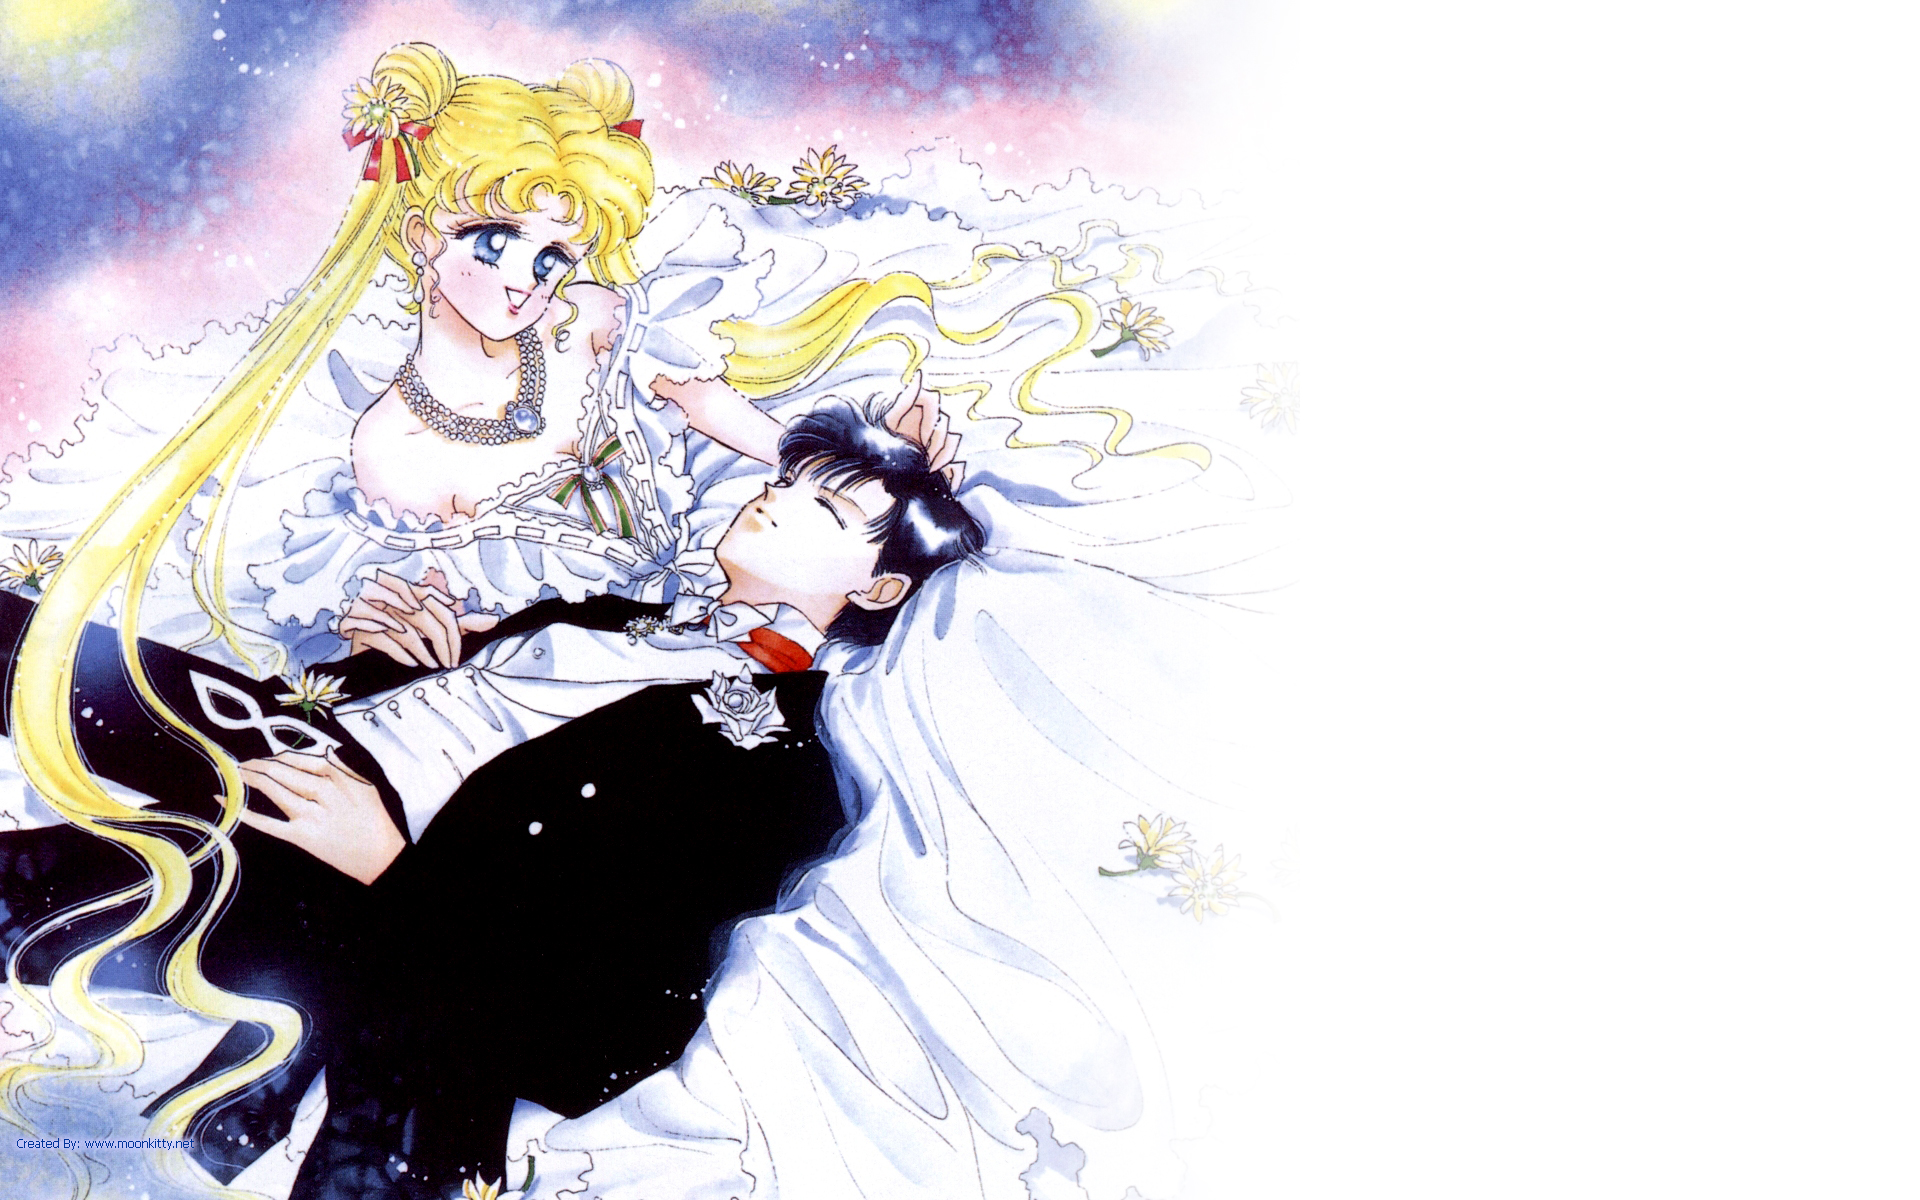 Sailor Moon Wallpapers